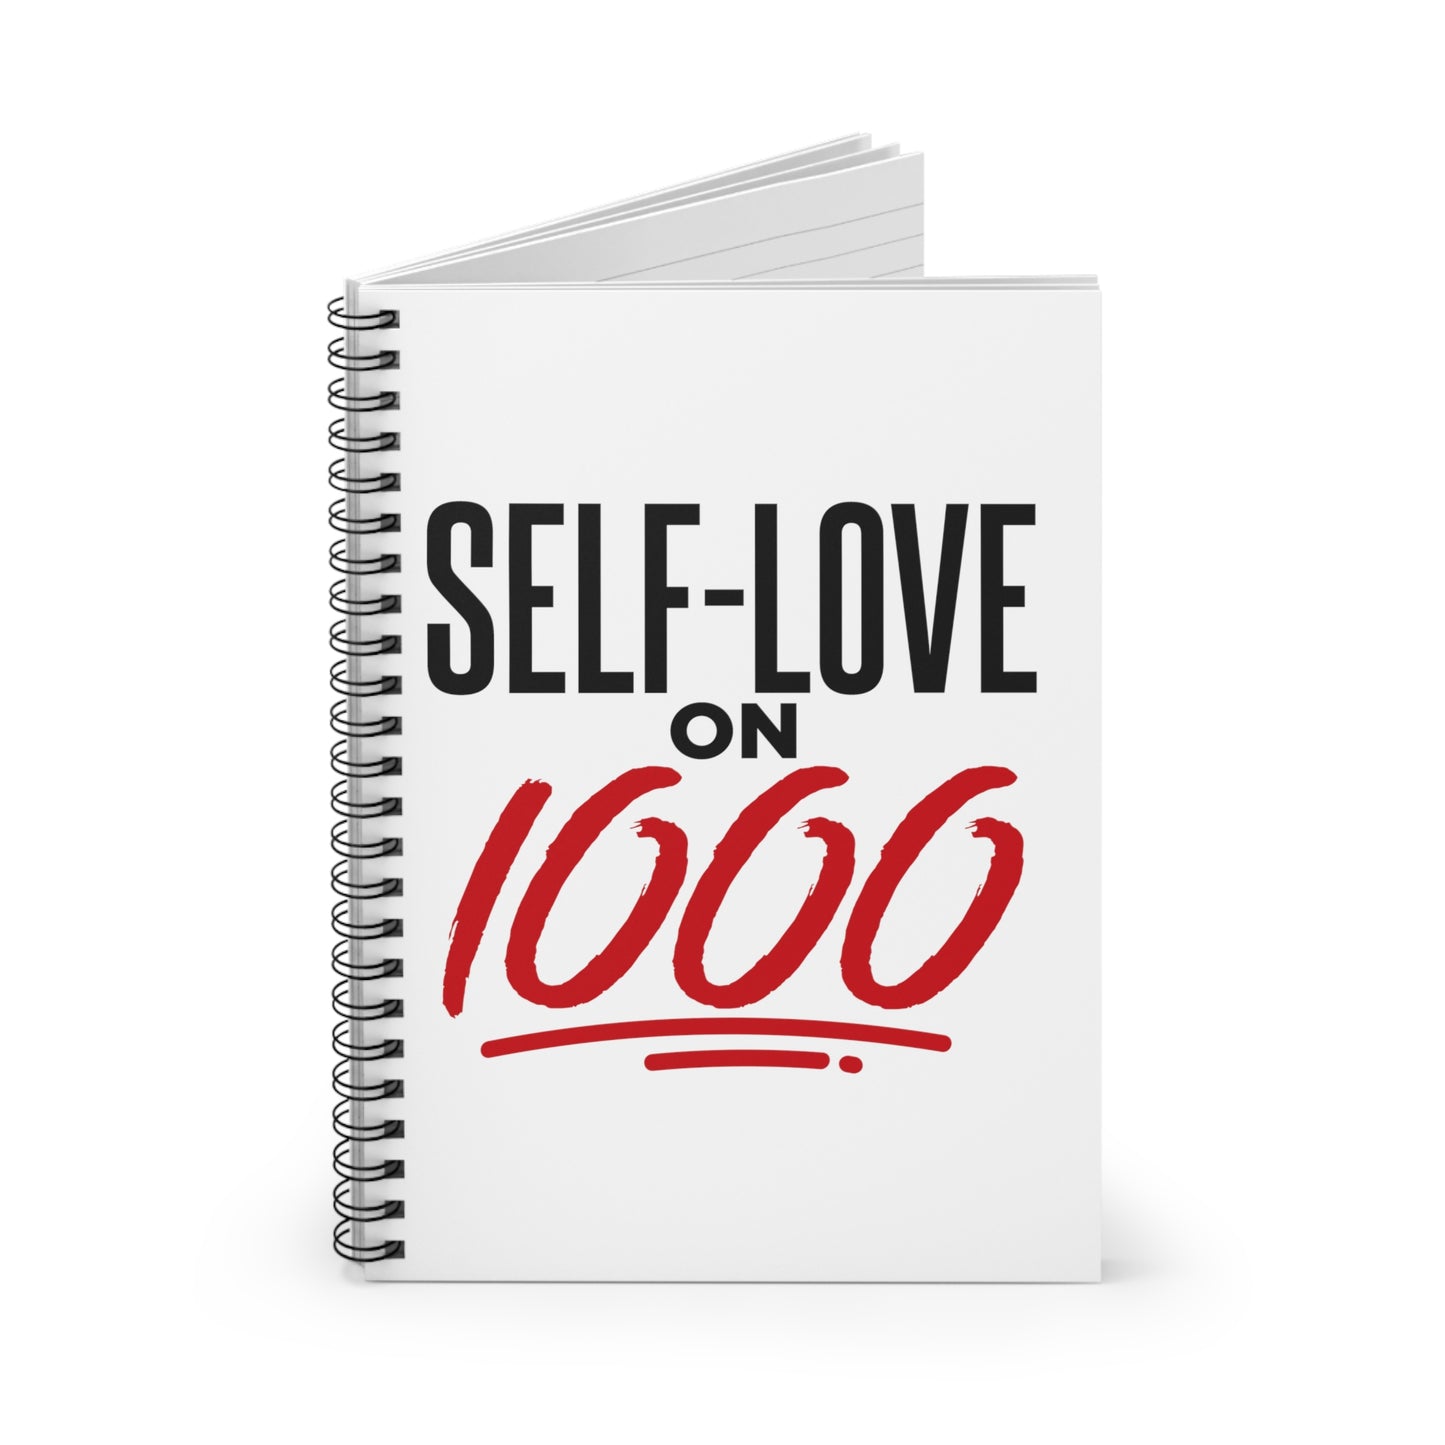 Self-Love on 1000 Journal